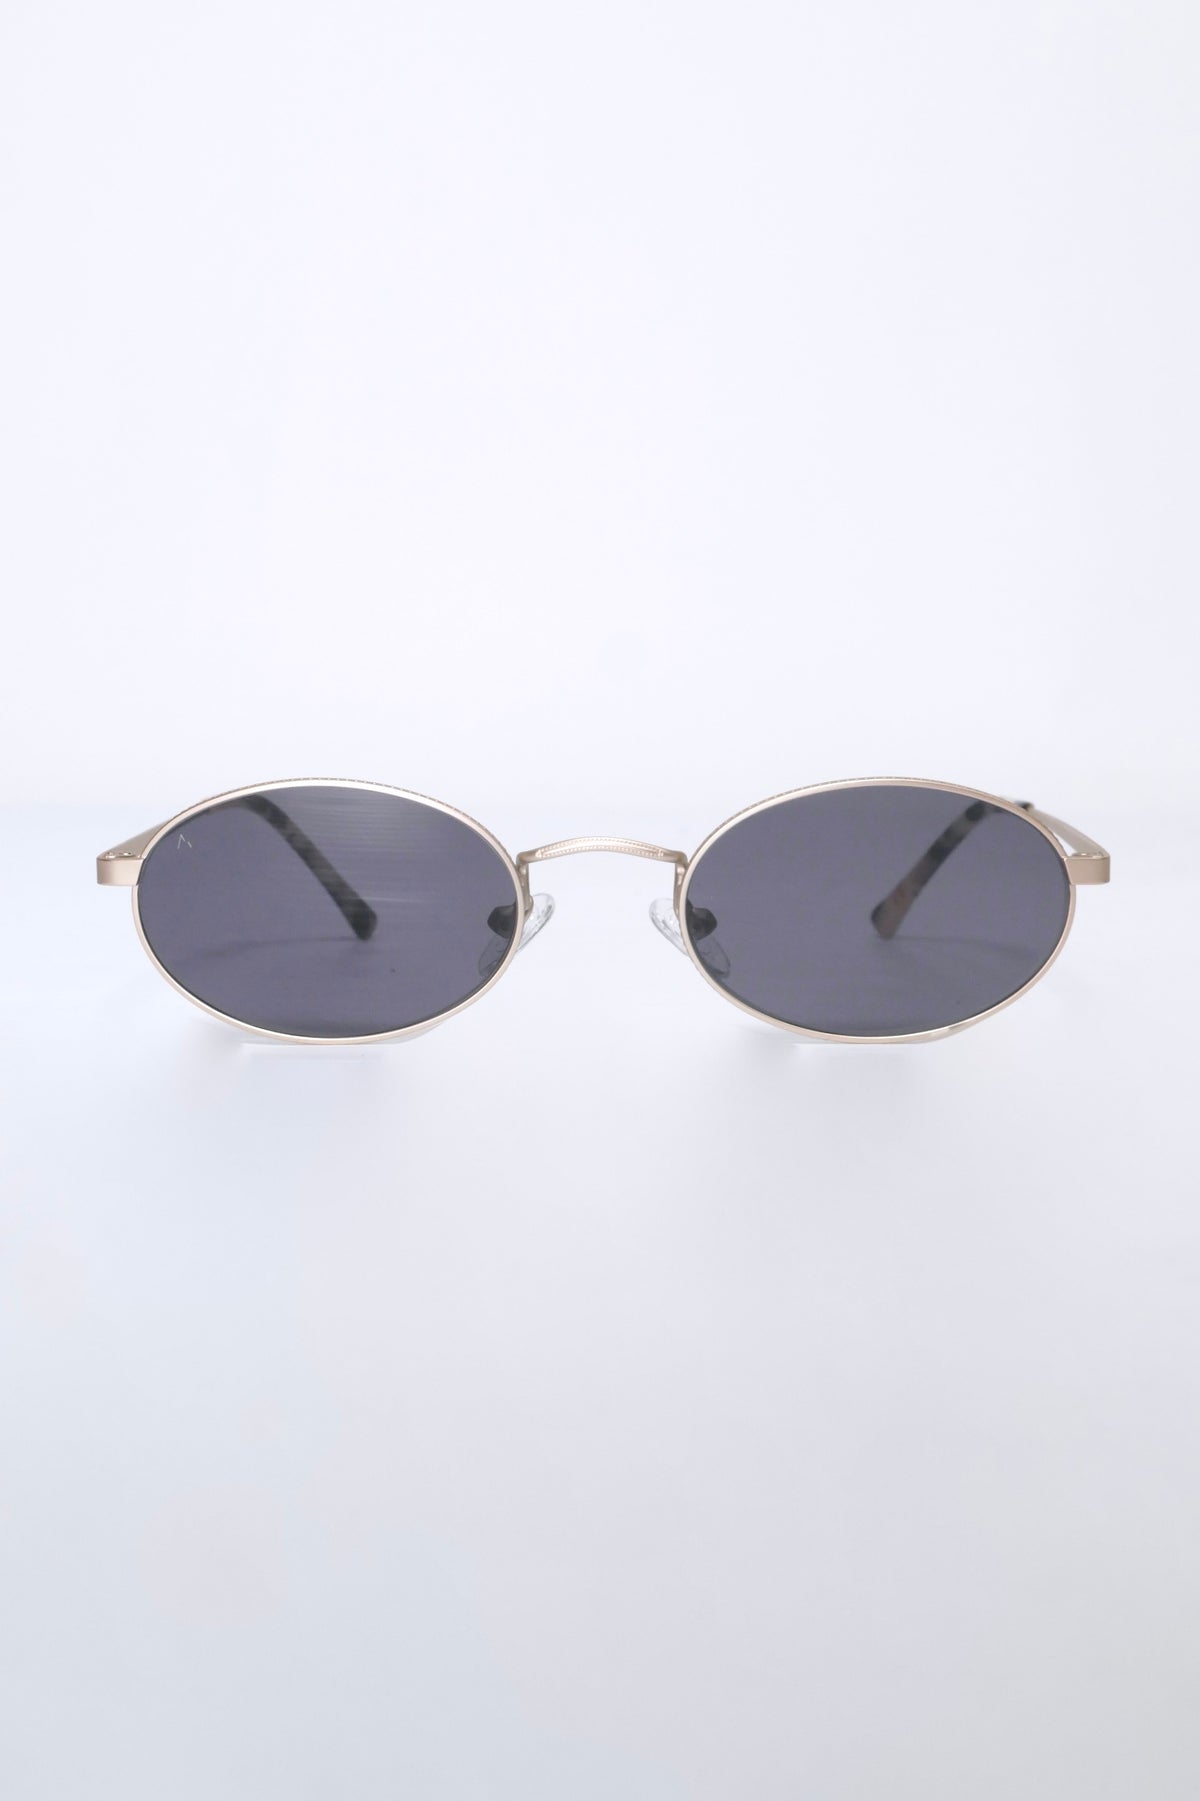 WEAREEYES RO Sunglasses - Gold/Black